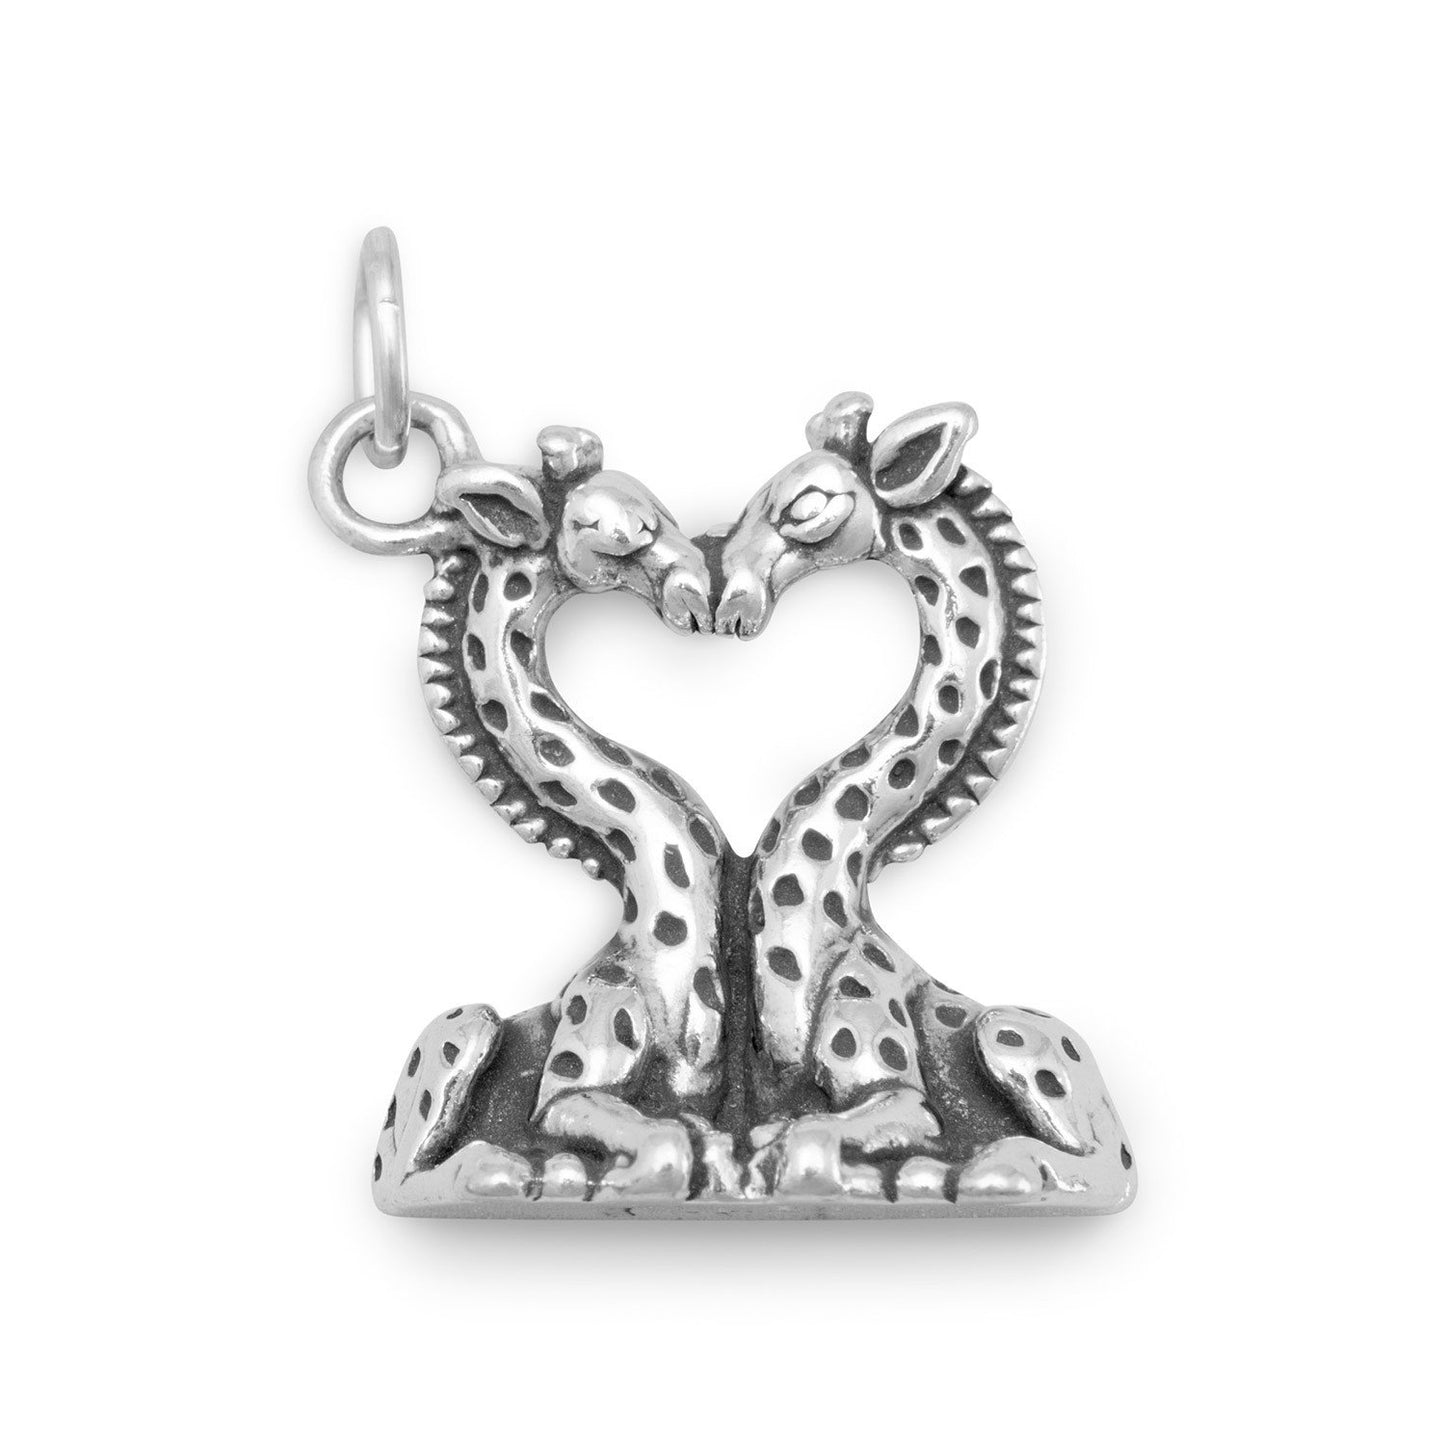 Sterling Silver Heart Shaped Giraffes Bracelet Charm